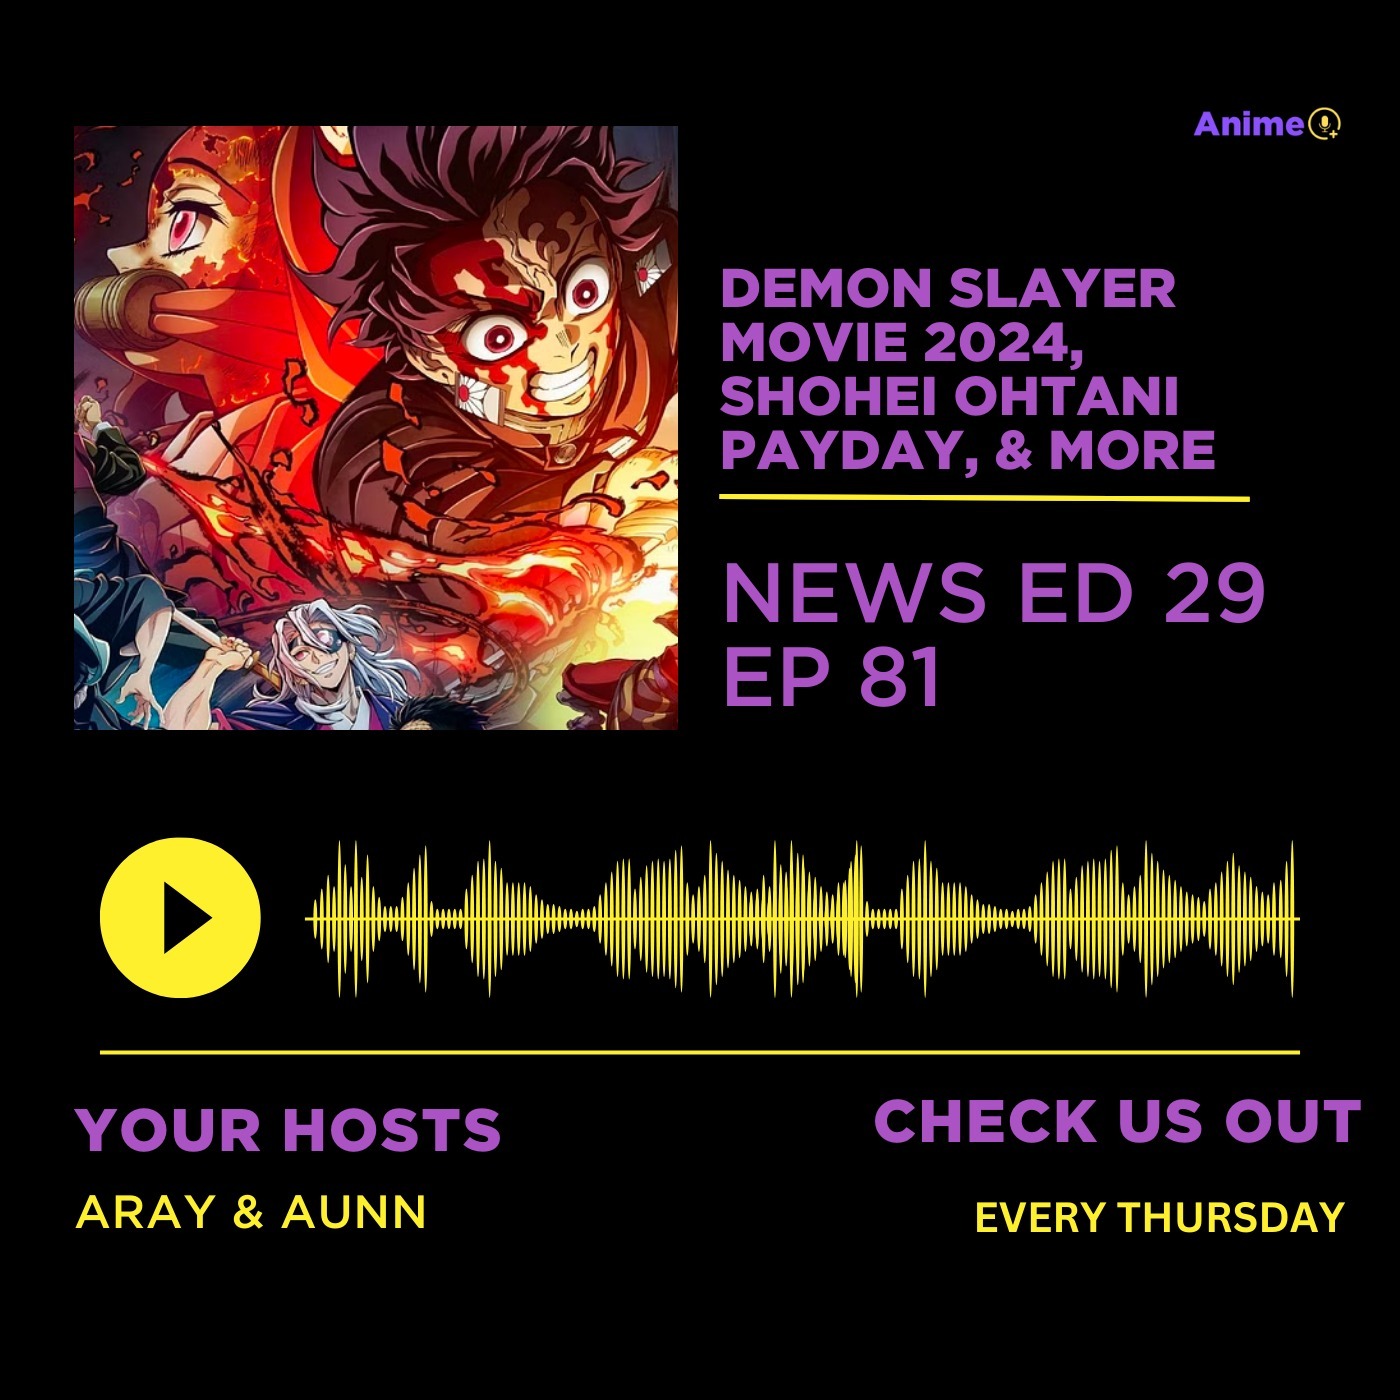 Demon Slayer Movie 2024, Shohei Ohtani Payday, & More Anime+ News Ed